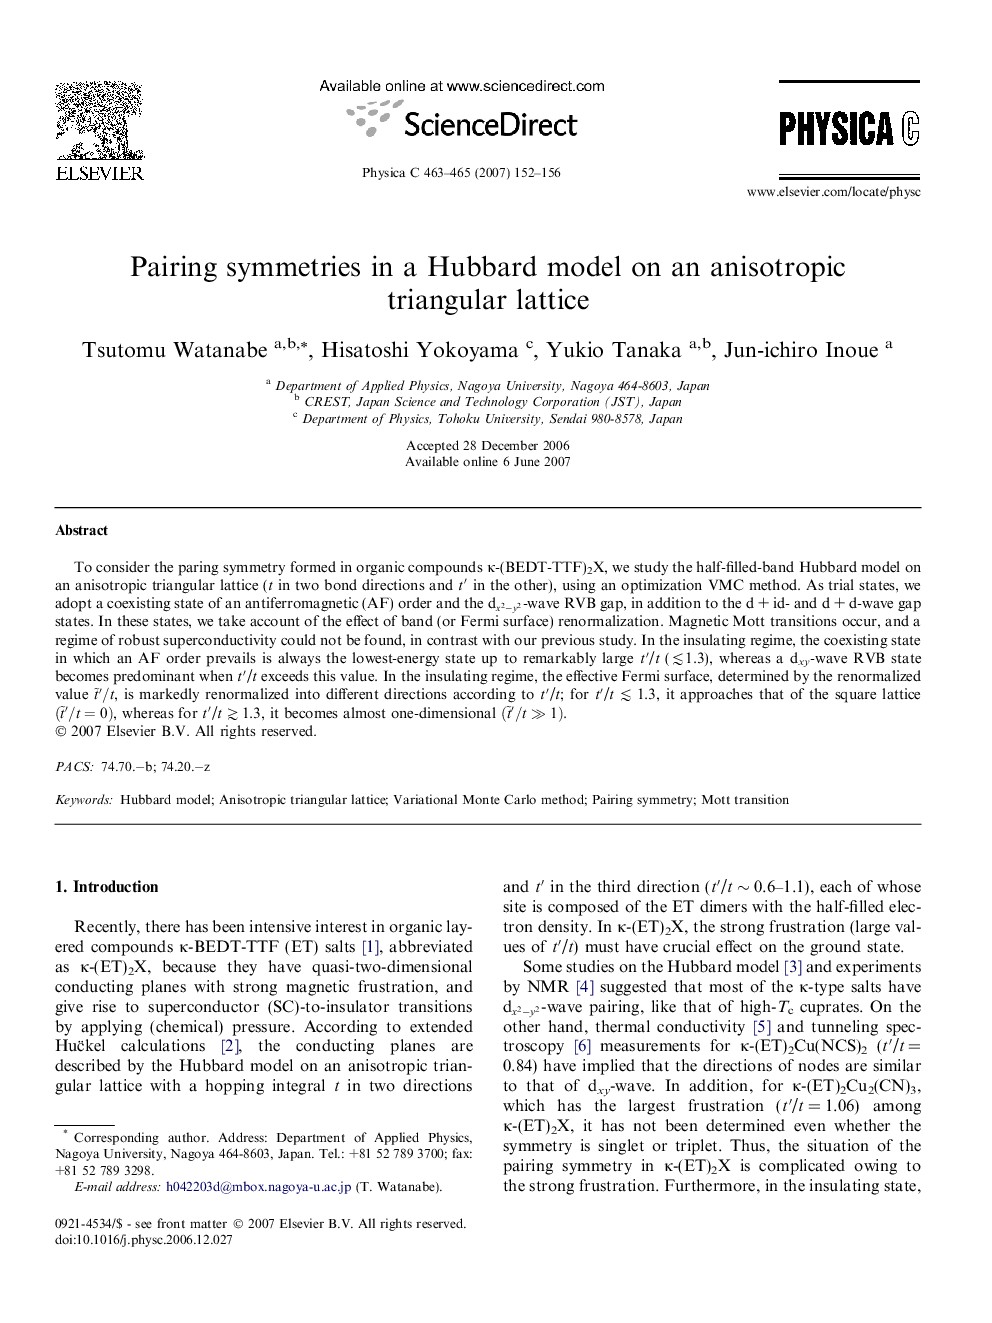 Pairing symmetries in a Hubbard model on an anisotropic triangular lattice